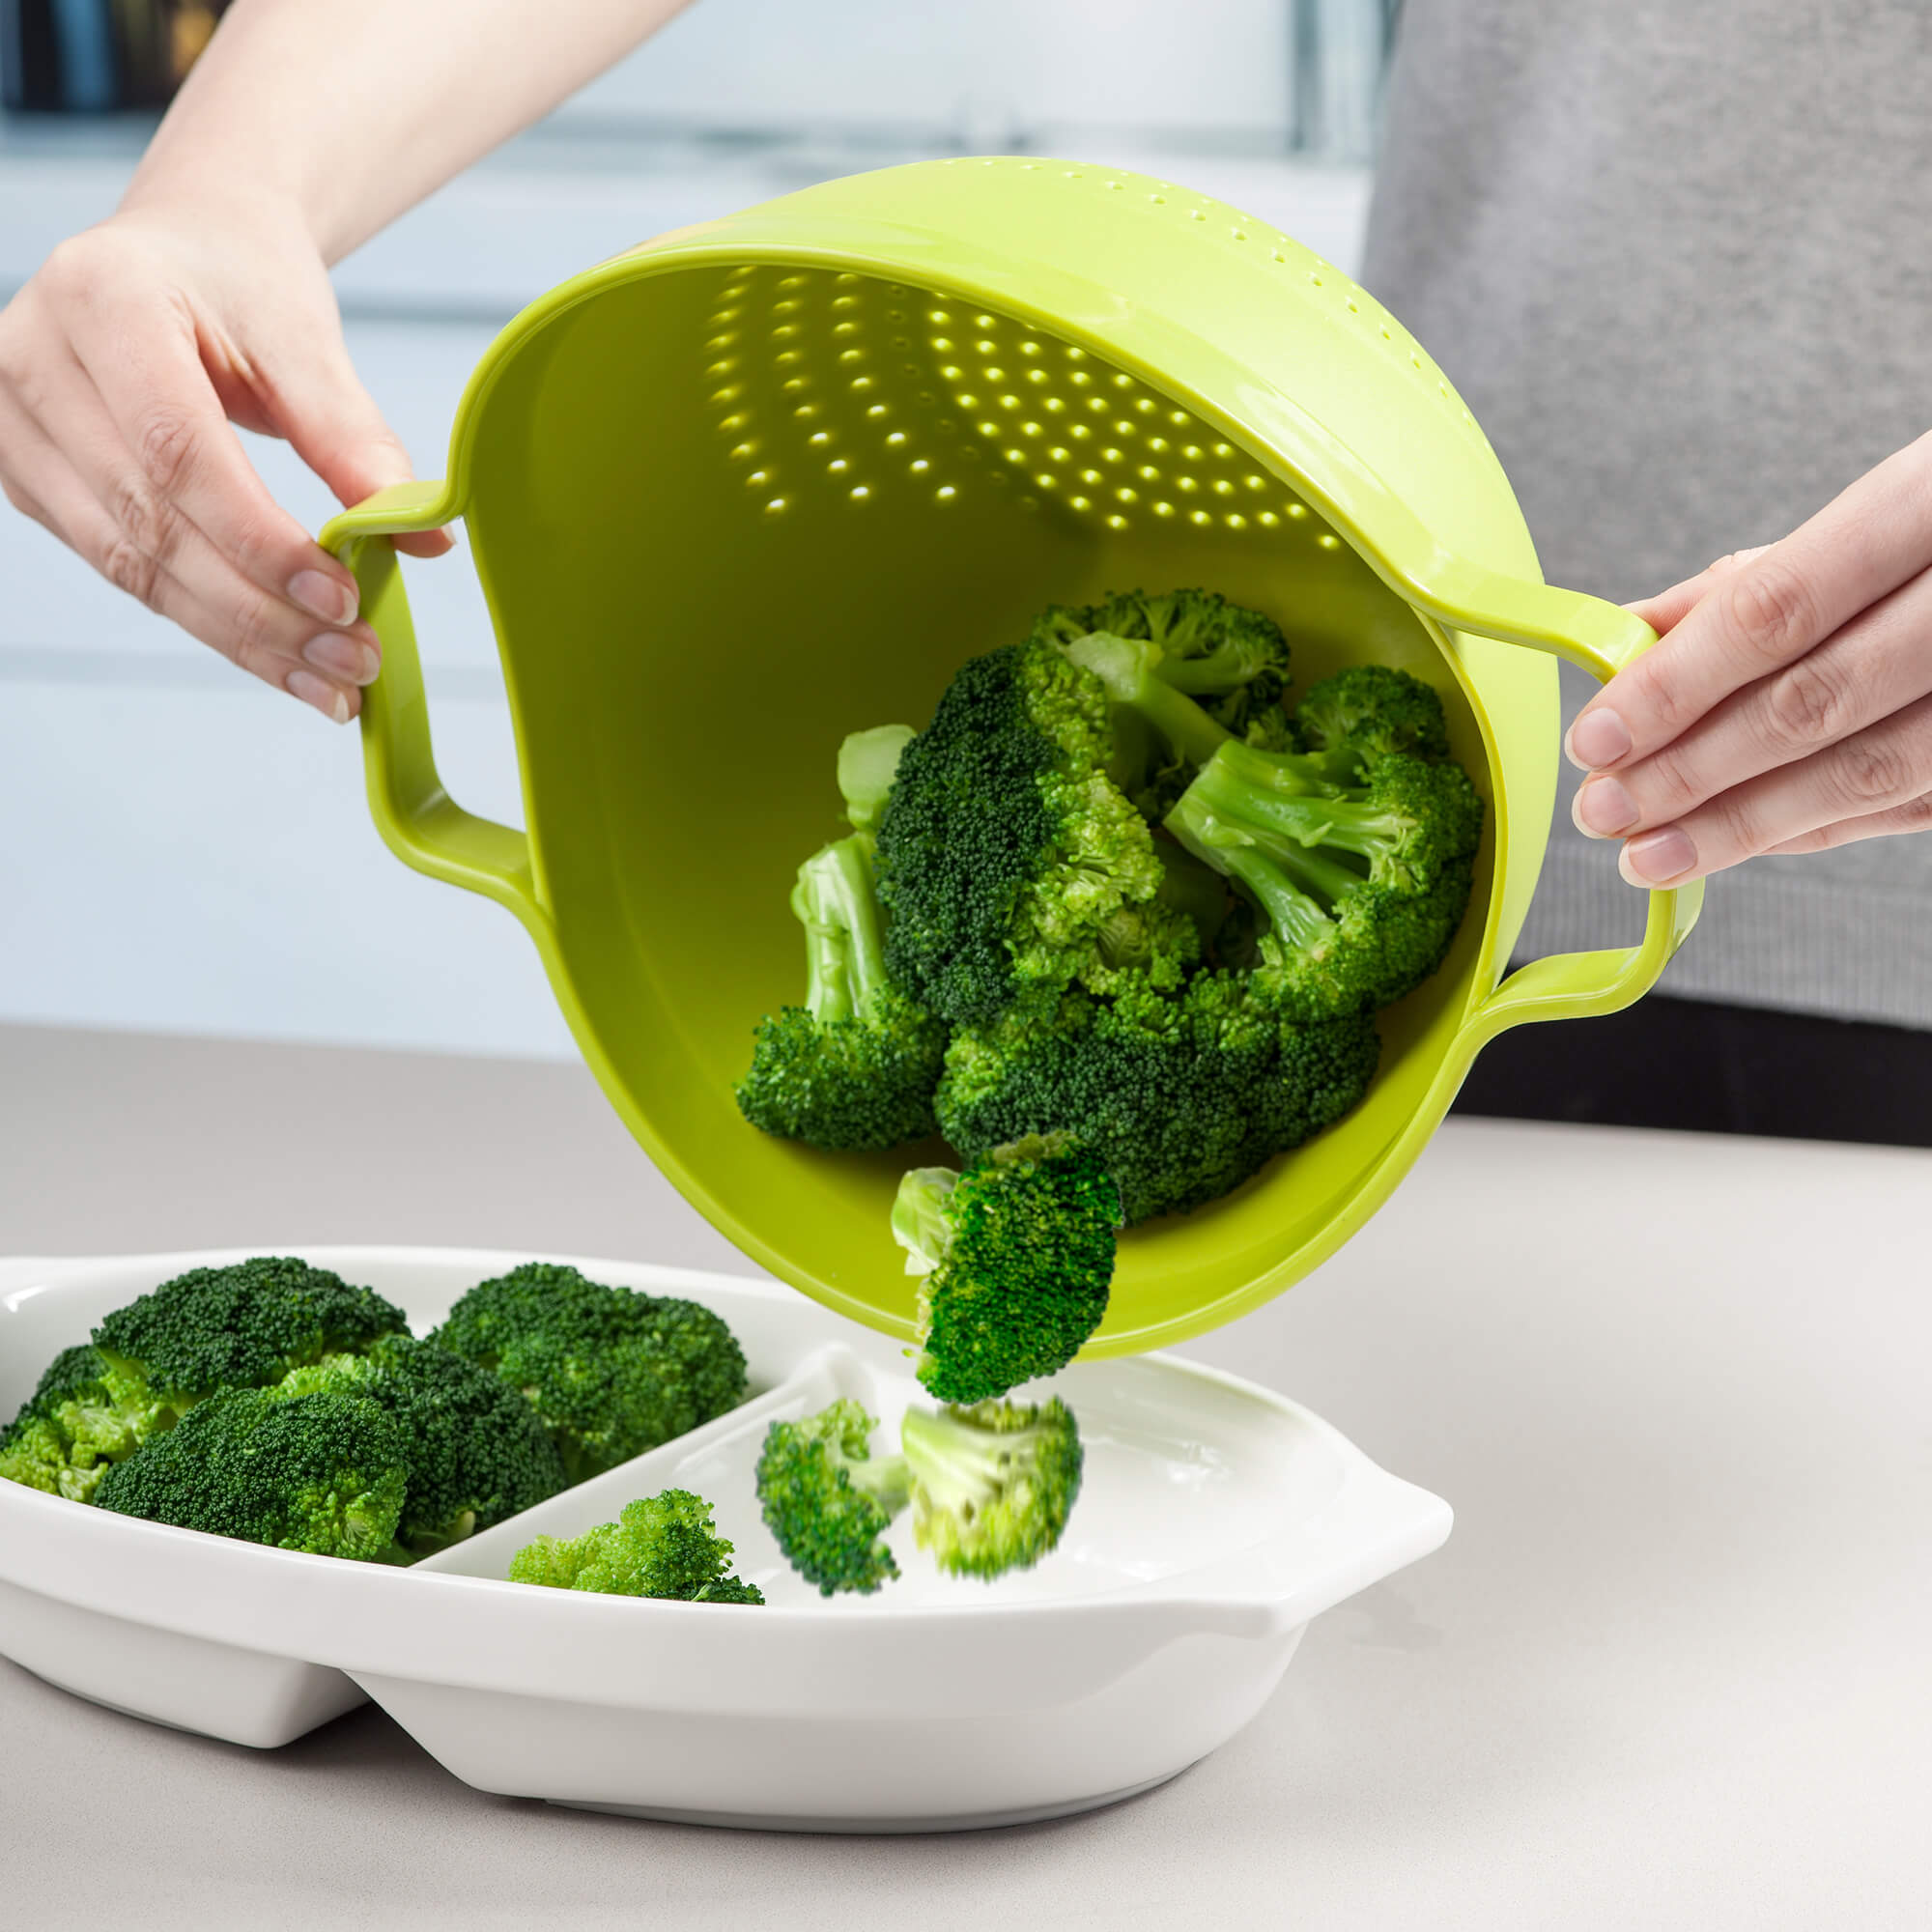 Using a Zeal Drain & Serve Colander to serve broccoli